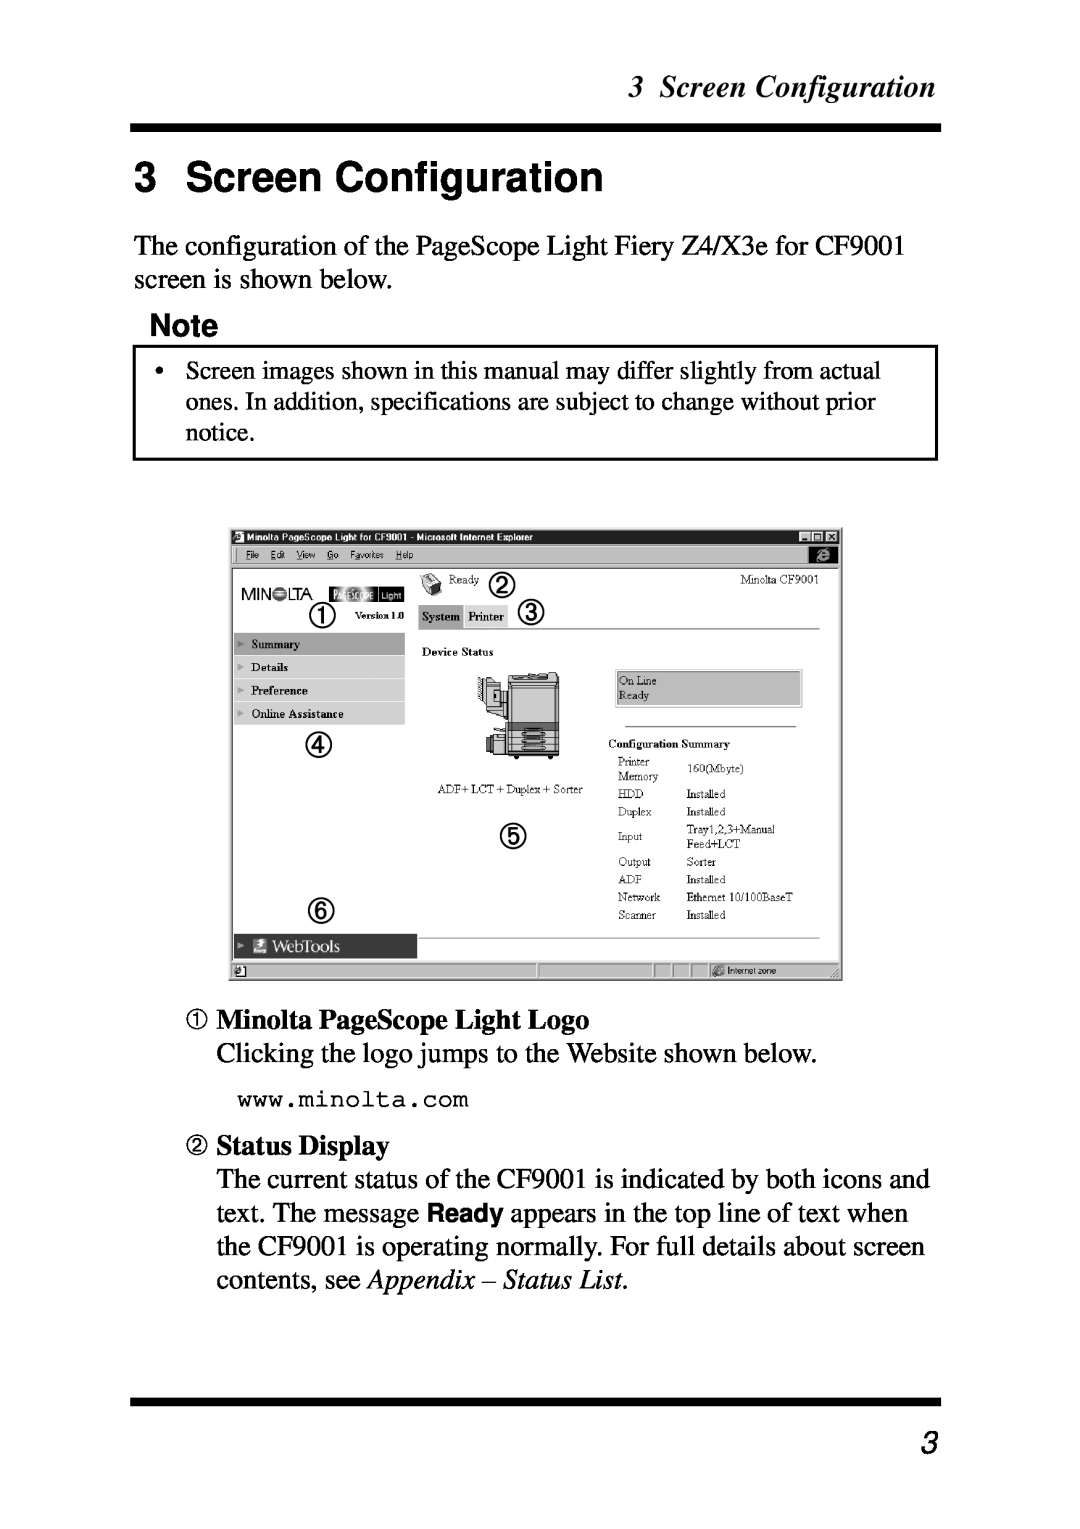 Minolta X3e, Z4 manual Screen Configuration, ➀ ➁➂ ➃ ➄ ➅, ➀ Minolta PageScope Light Logo, ➁ Status Display 